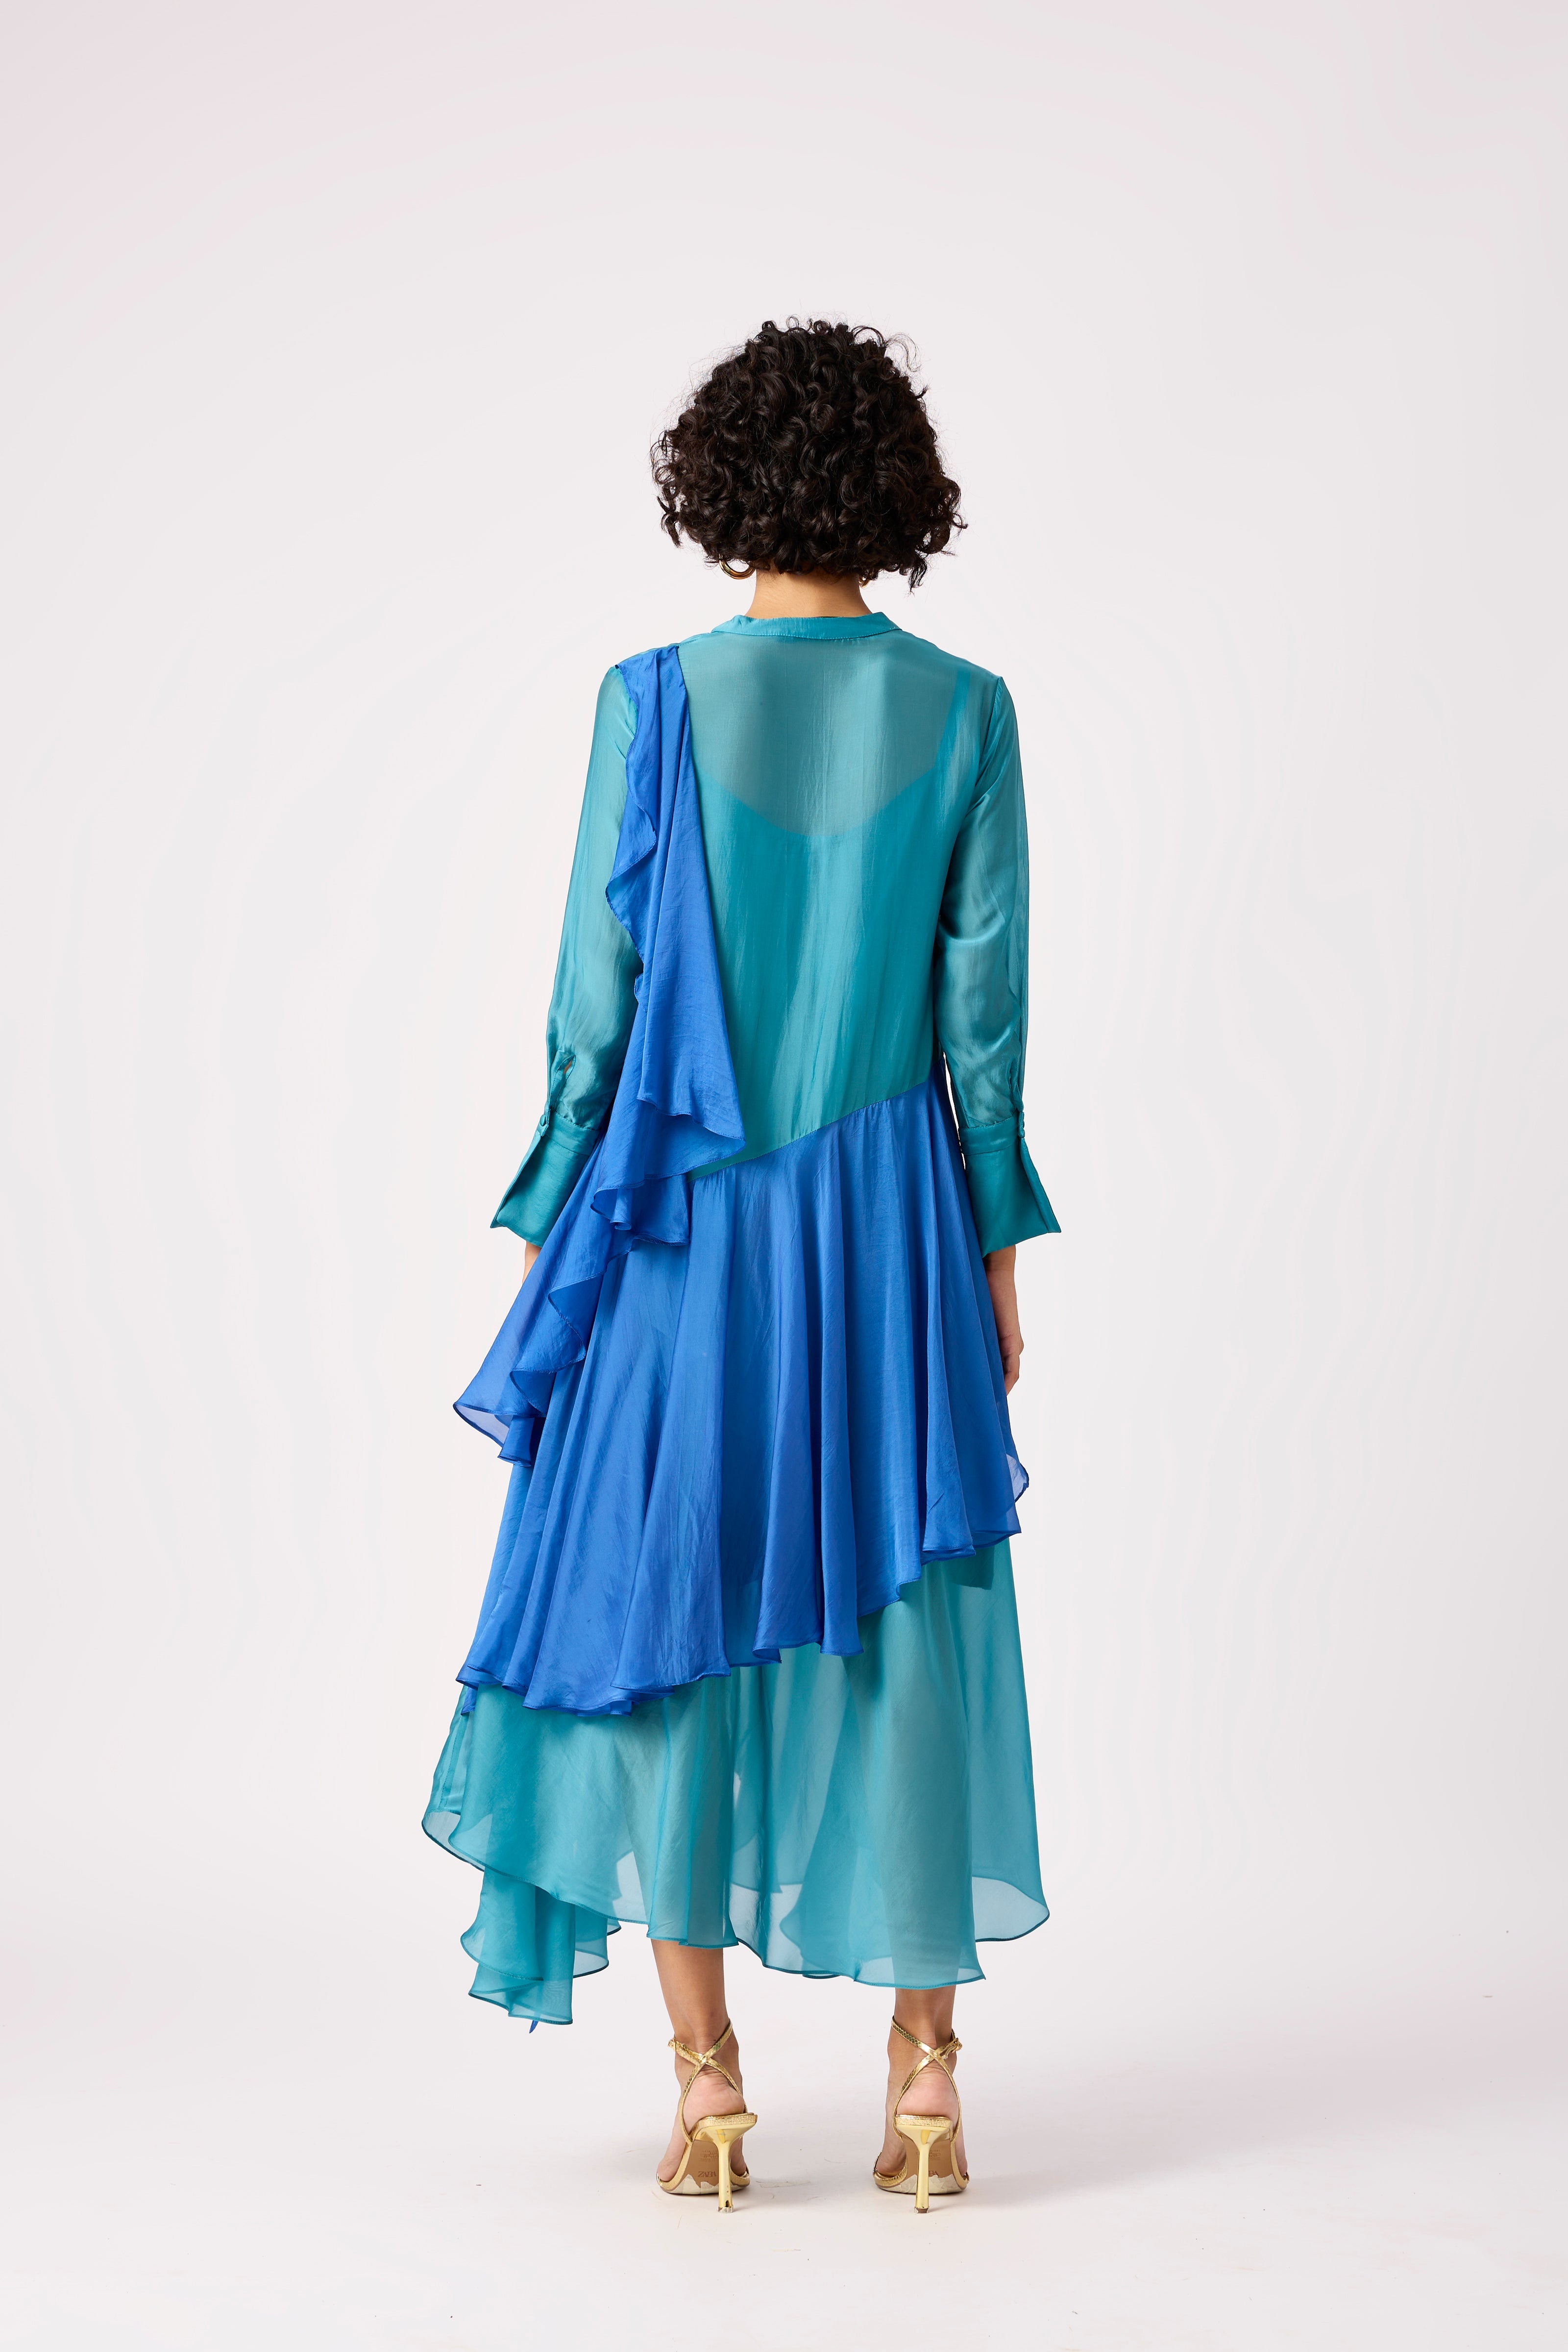 Clive Organza Shirt Dress - Turquoise & Azure Blue